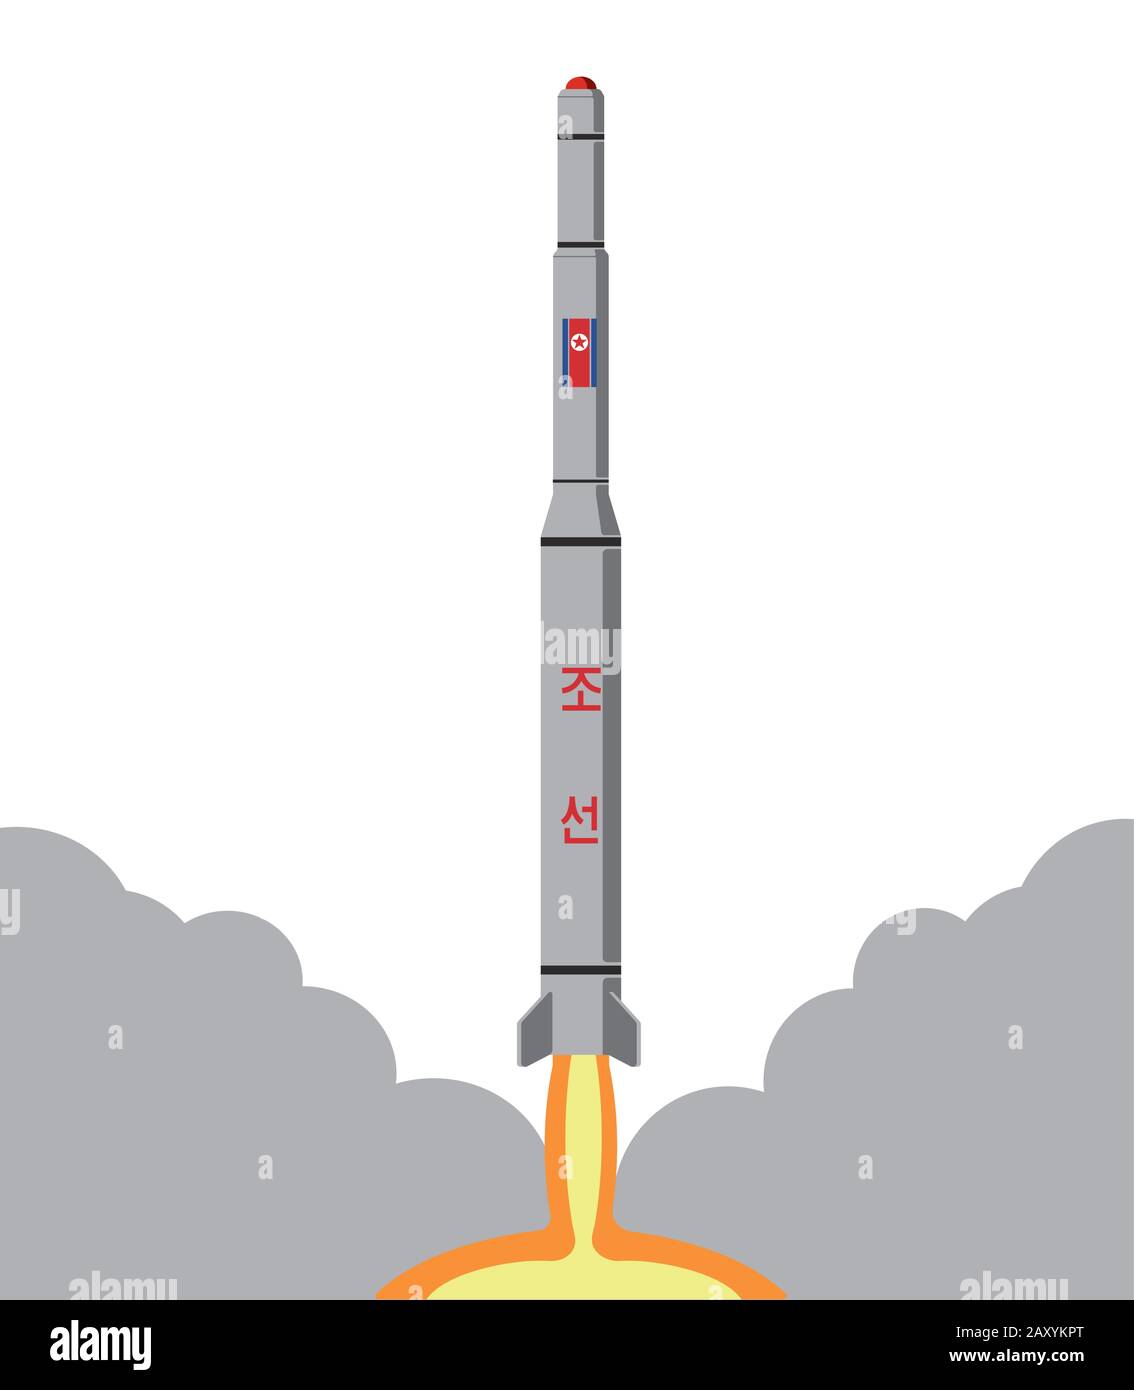 North korean missile vector illustration Stock Vector